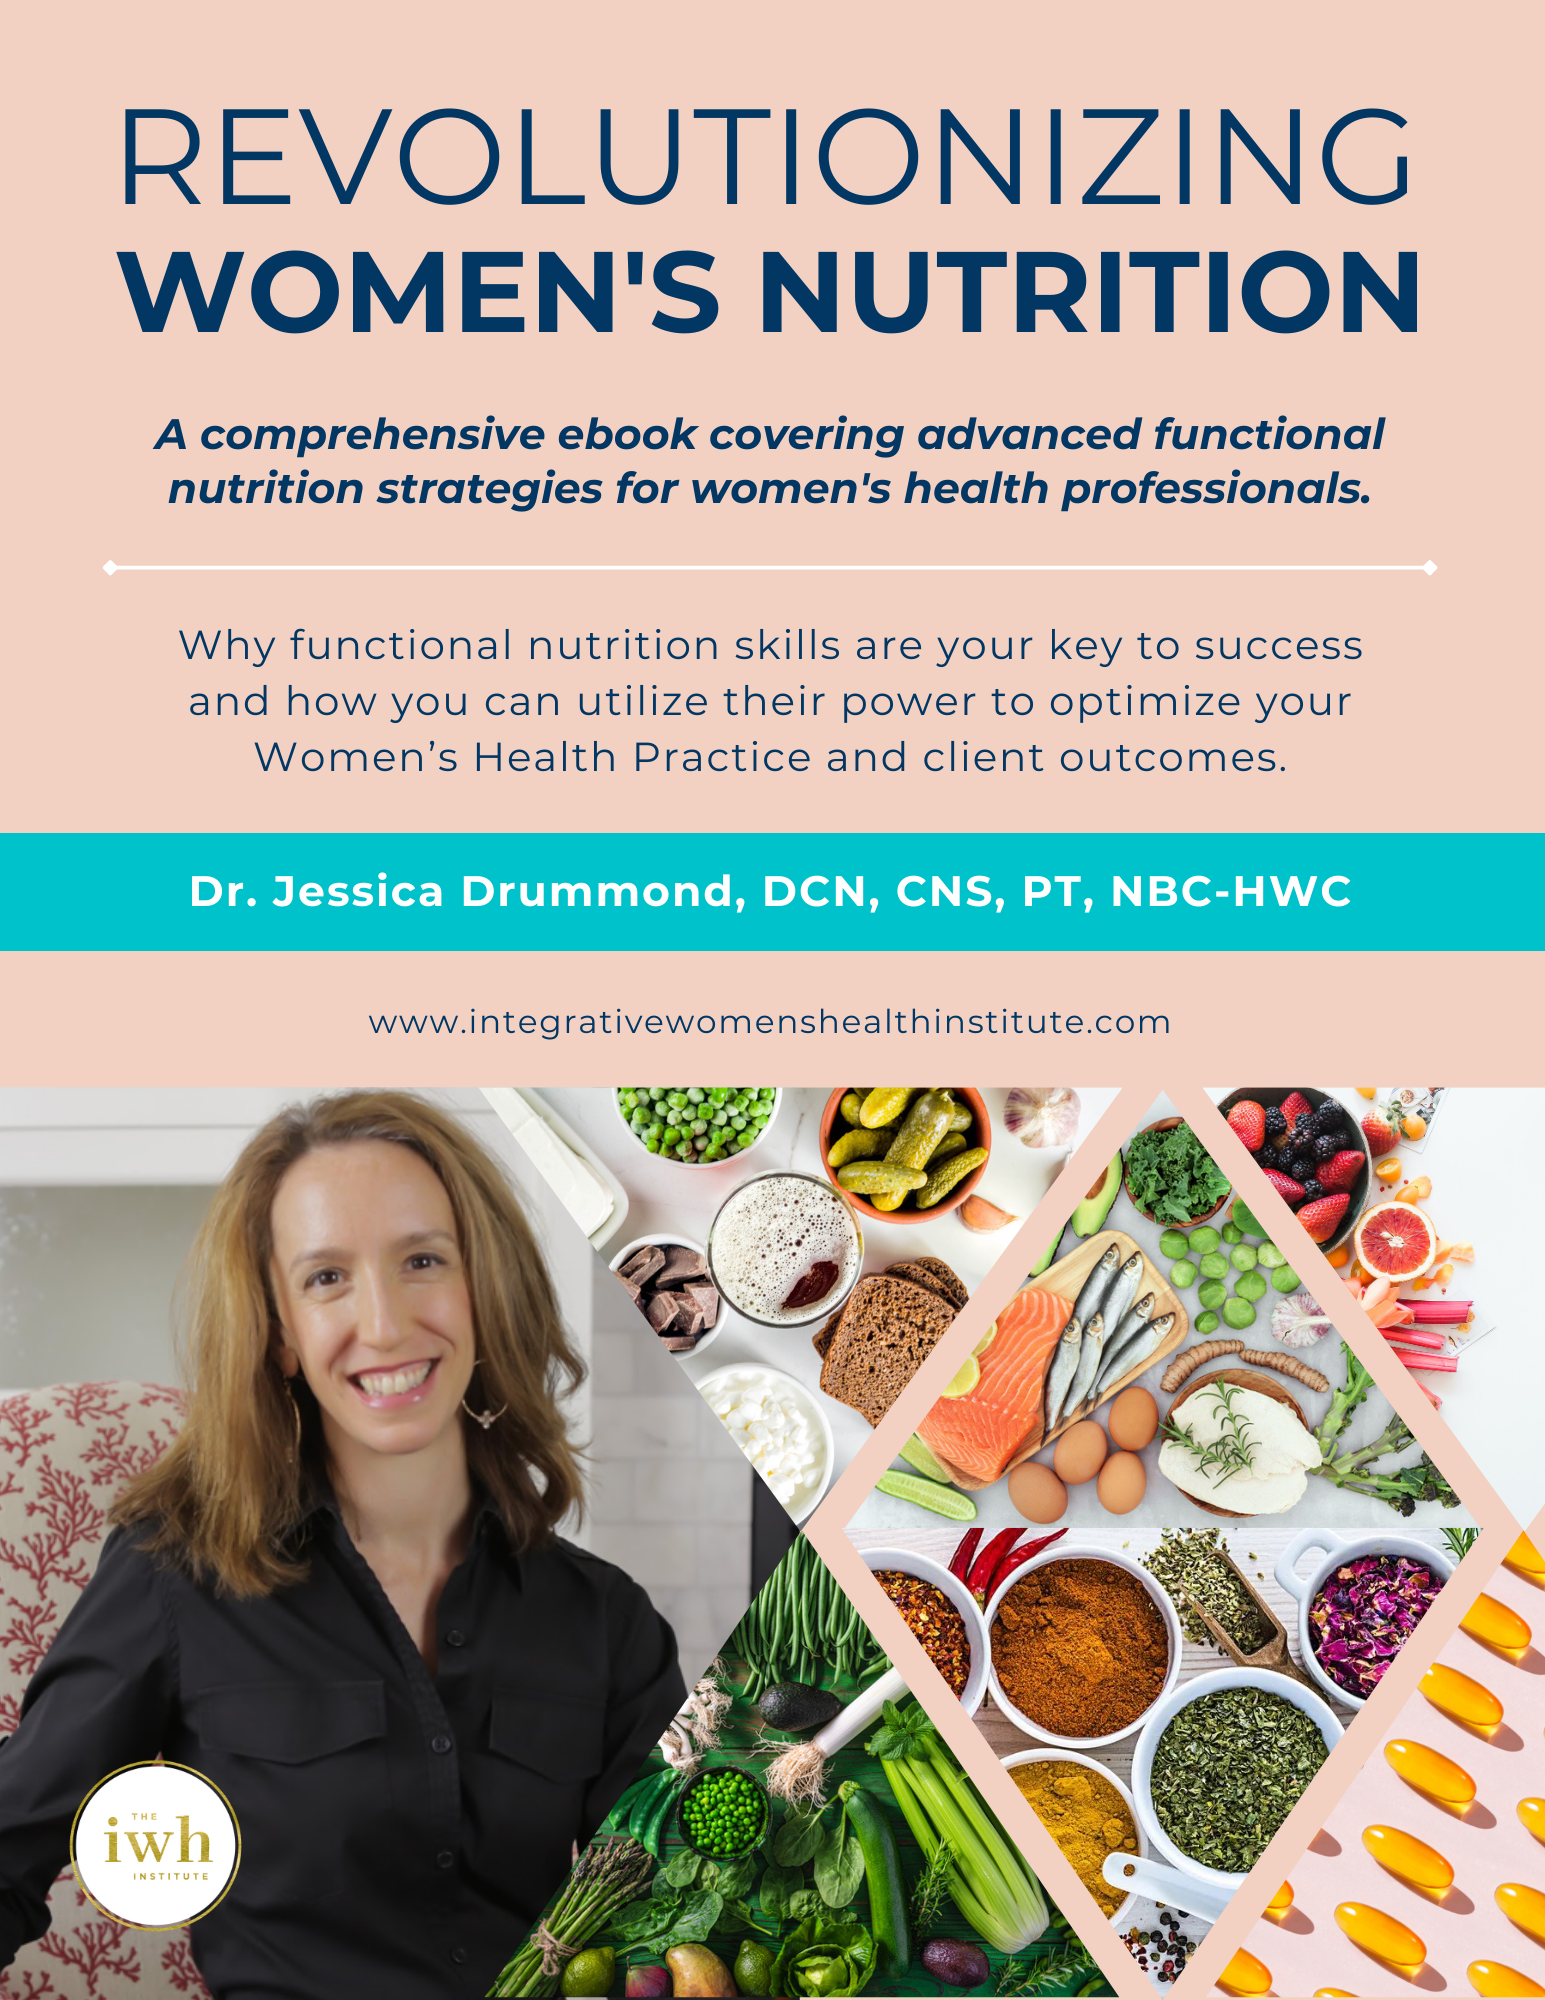 Revolutionizing Women's Nutrition eBook by Dr. Jessica Drummond<br />
